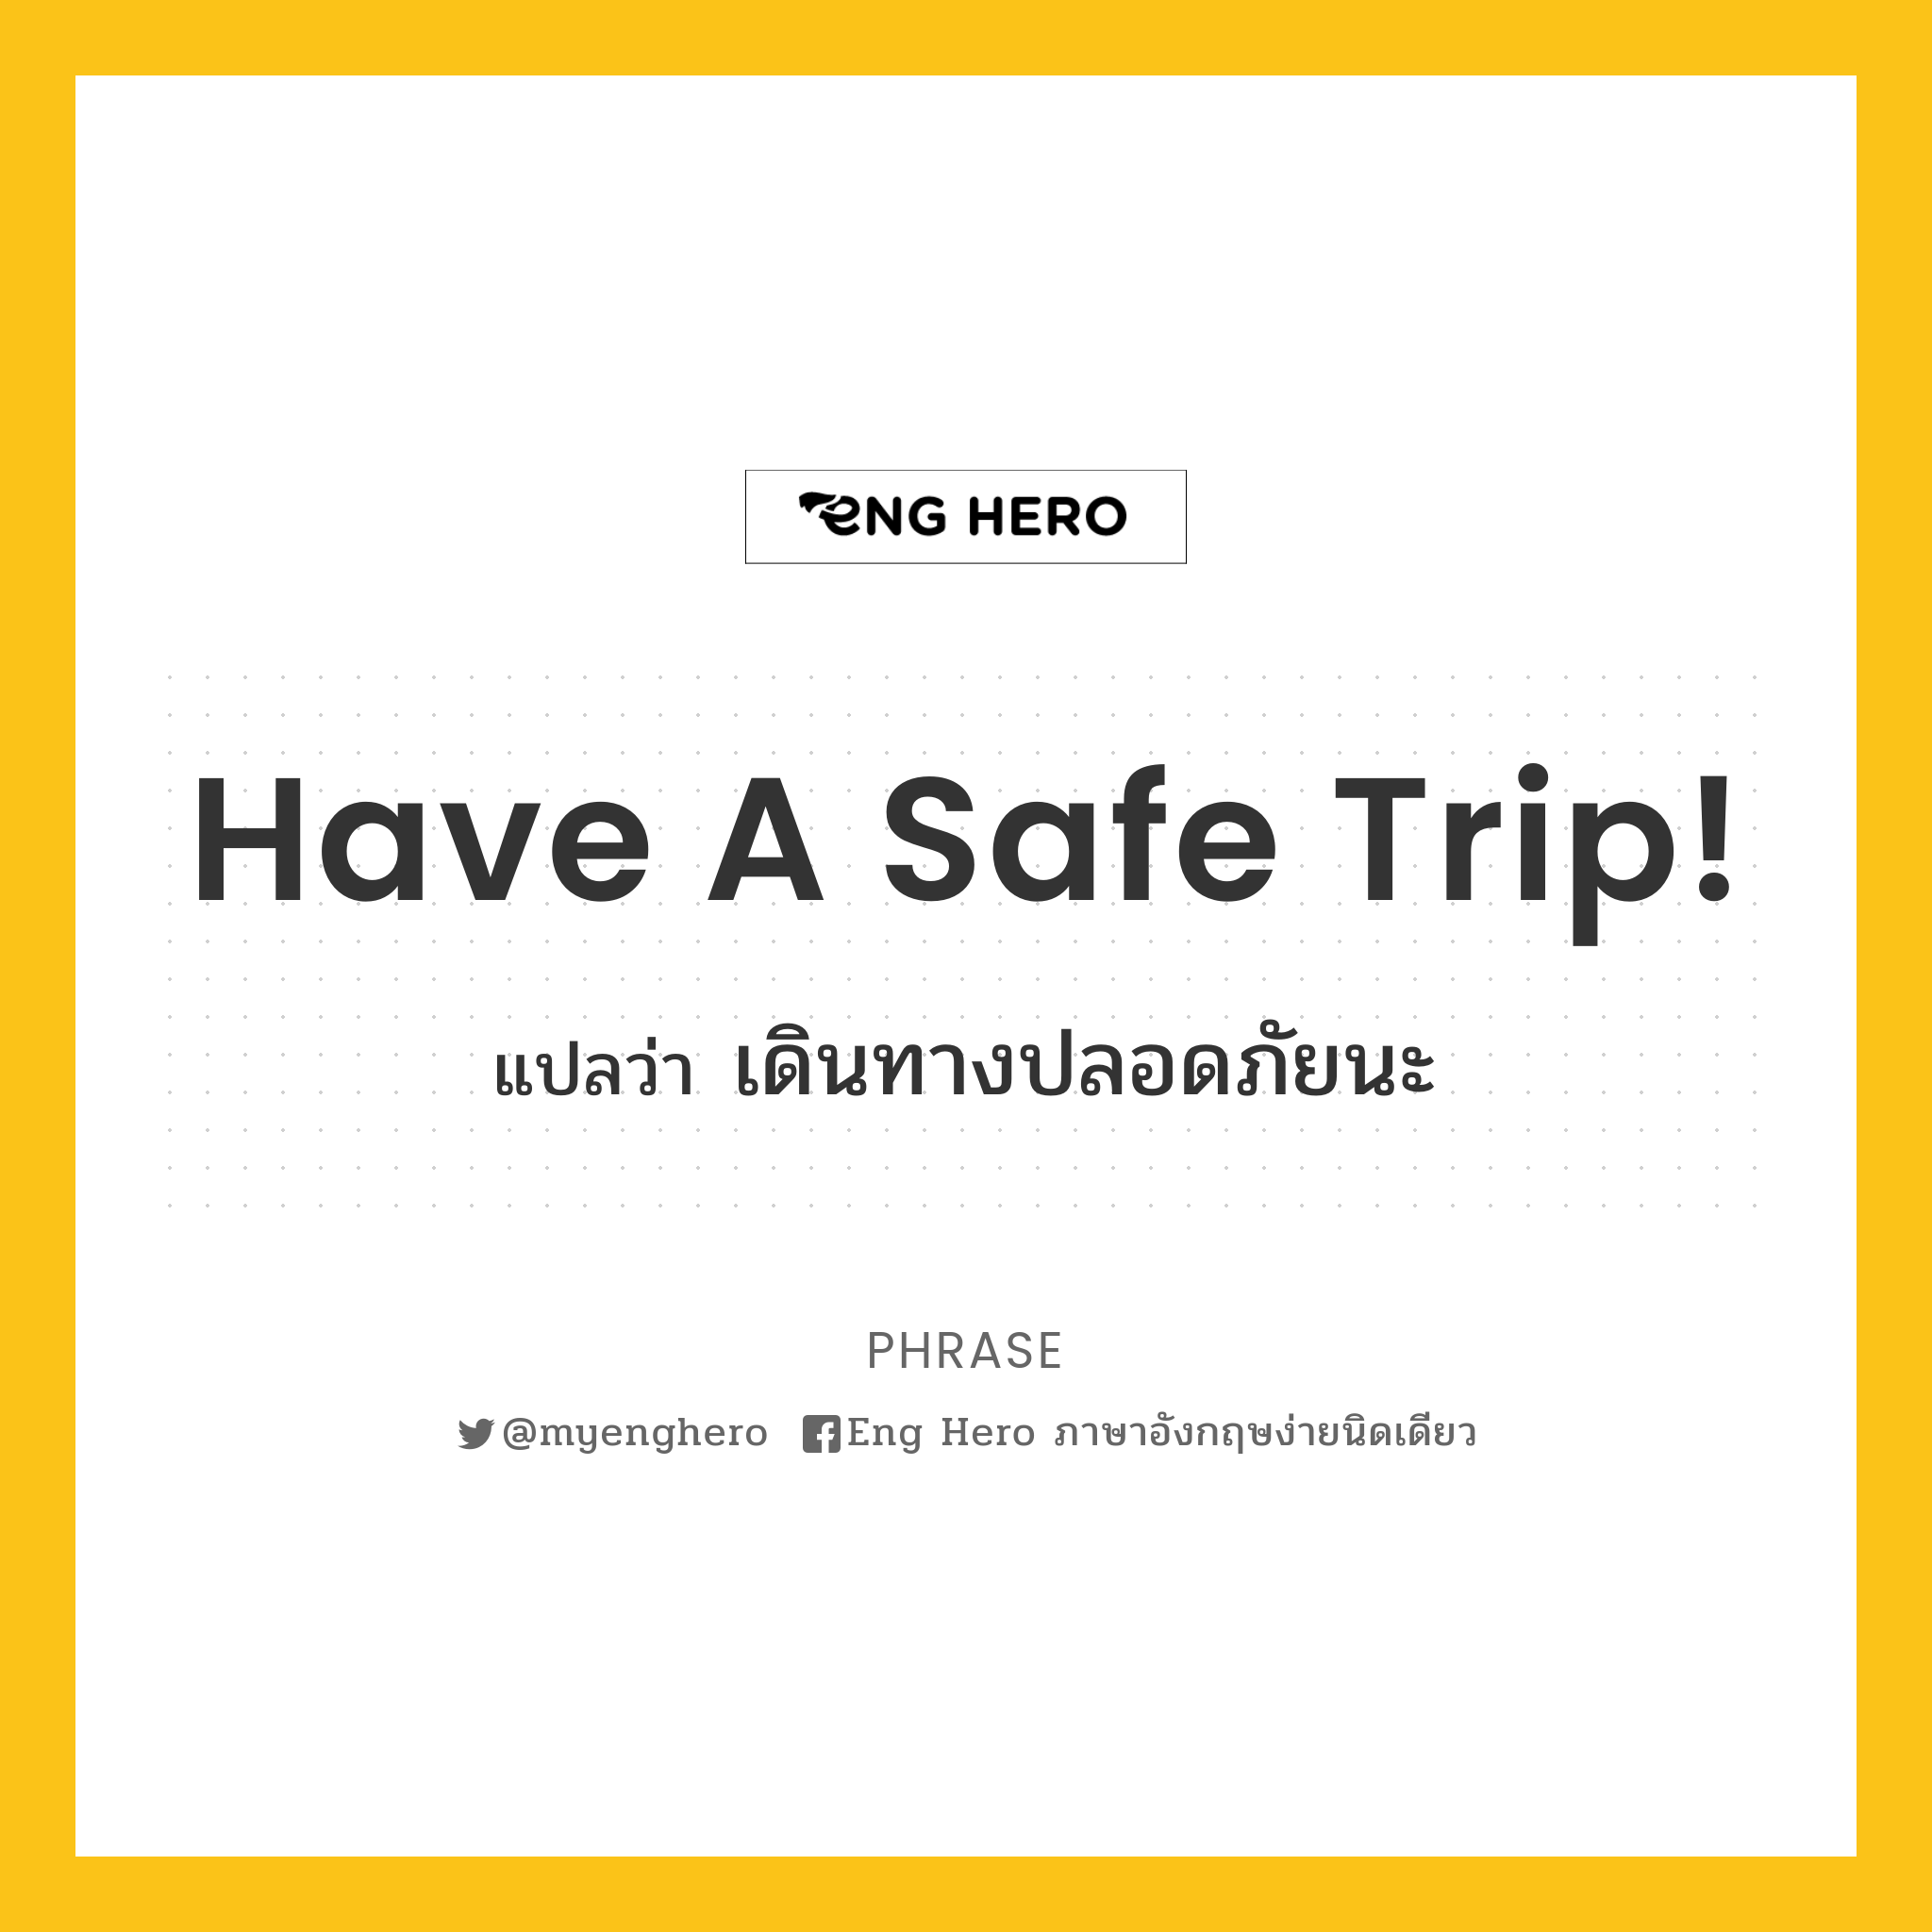 Have a safe trip!